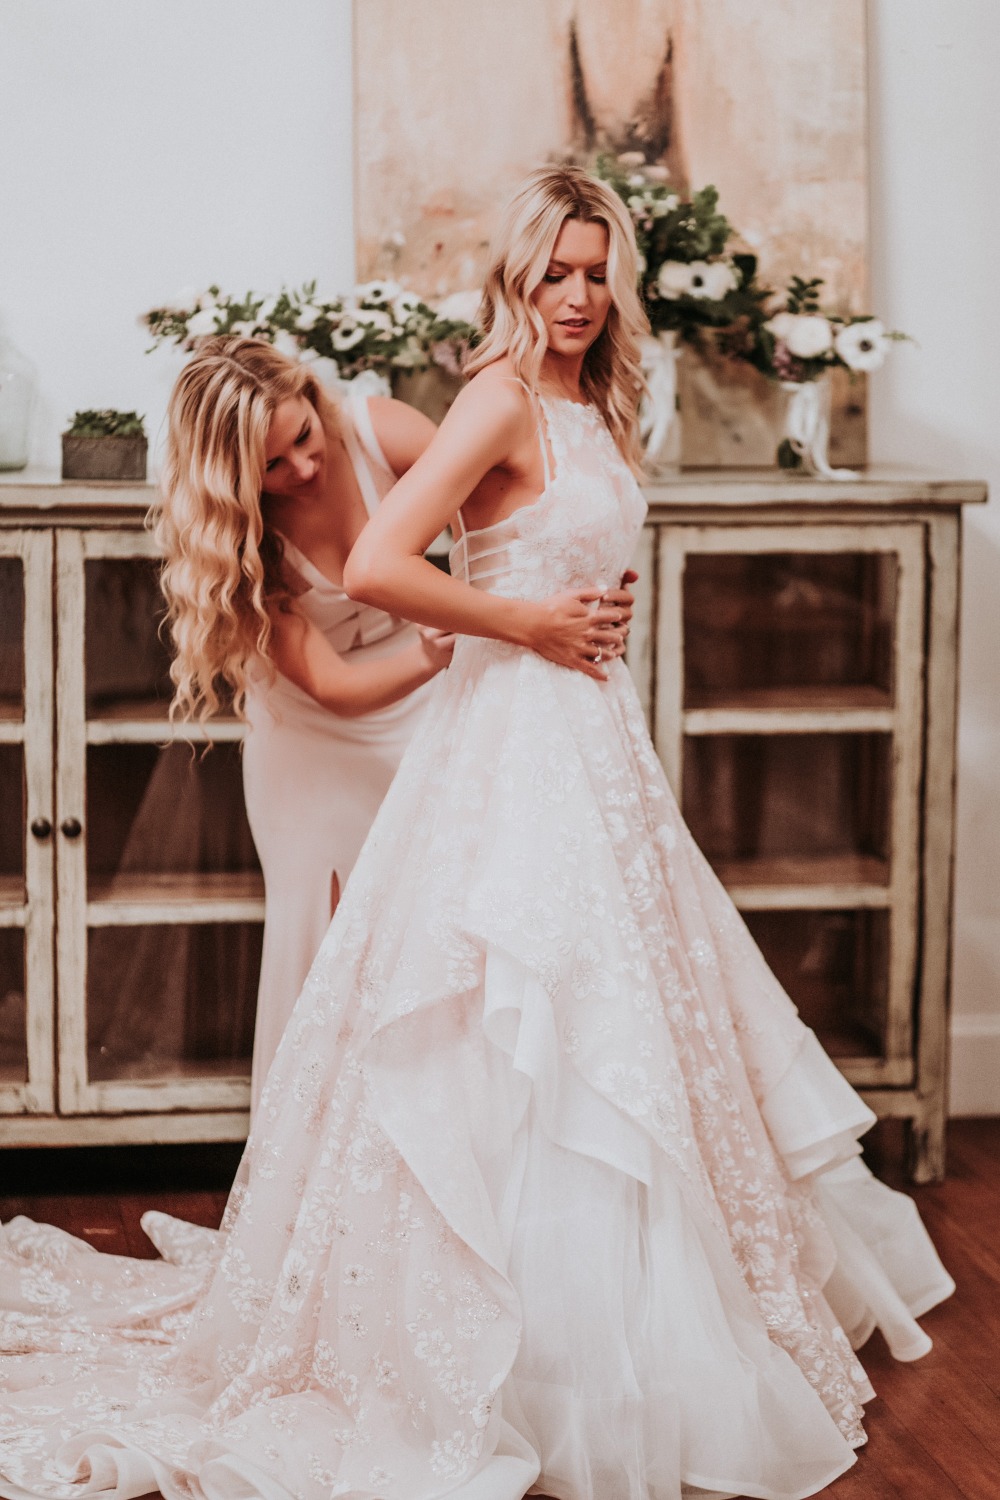 Hayley Paige helps bride into dress